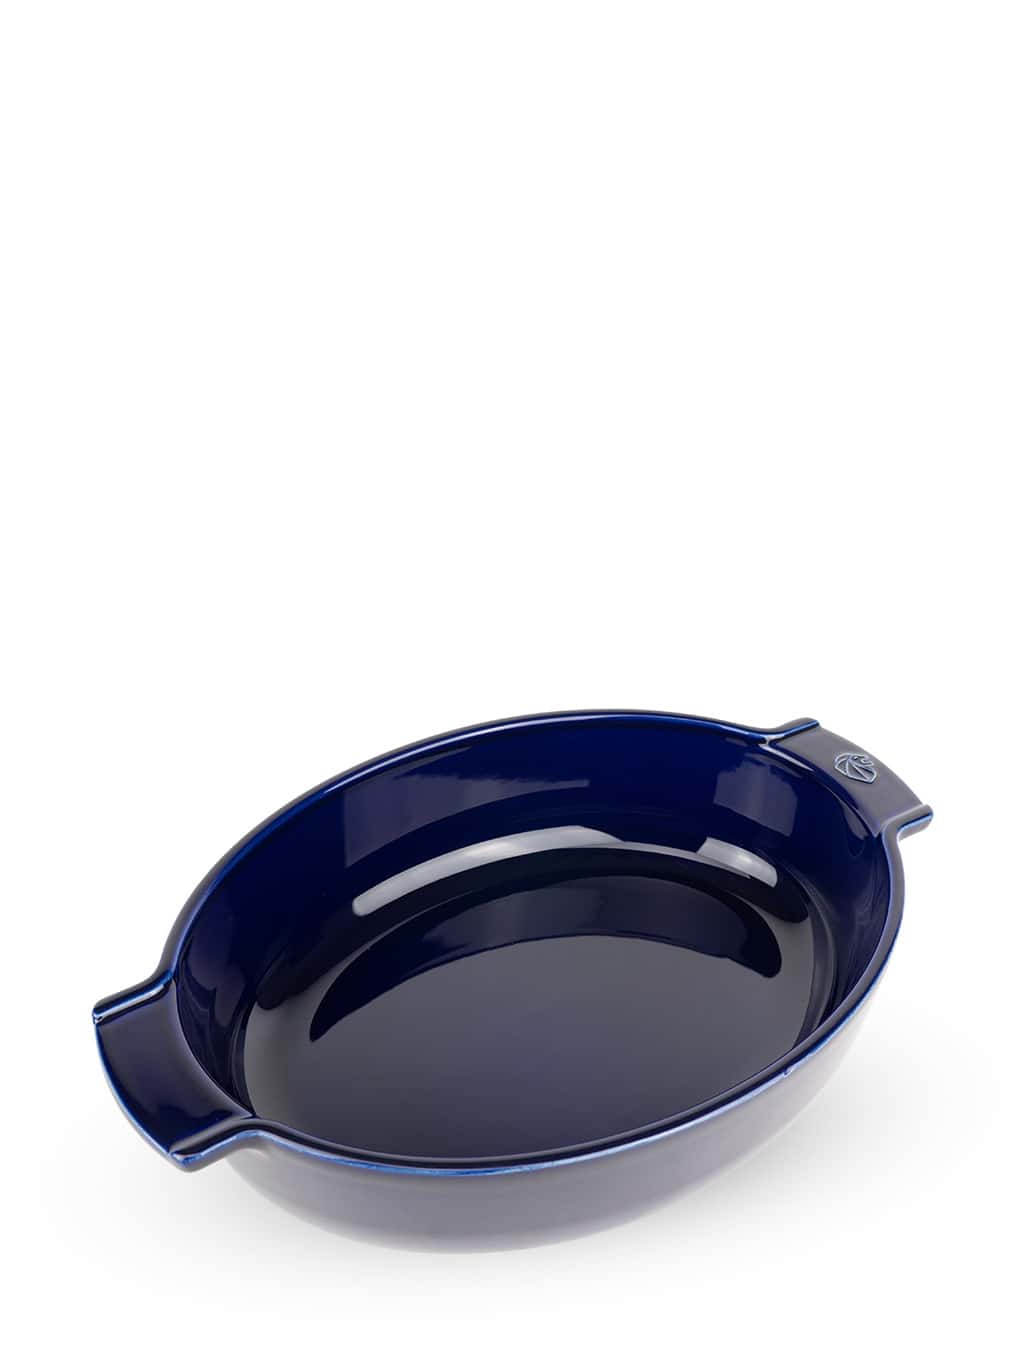 Image of Appolia Blue Ceramic Oval Baking Dish, 31cm Appolia